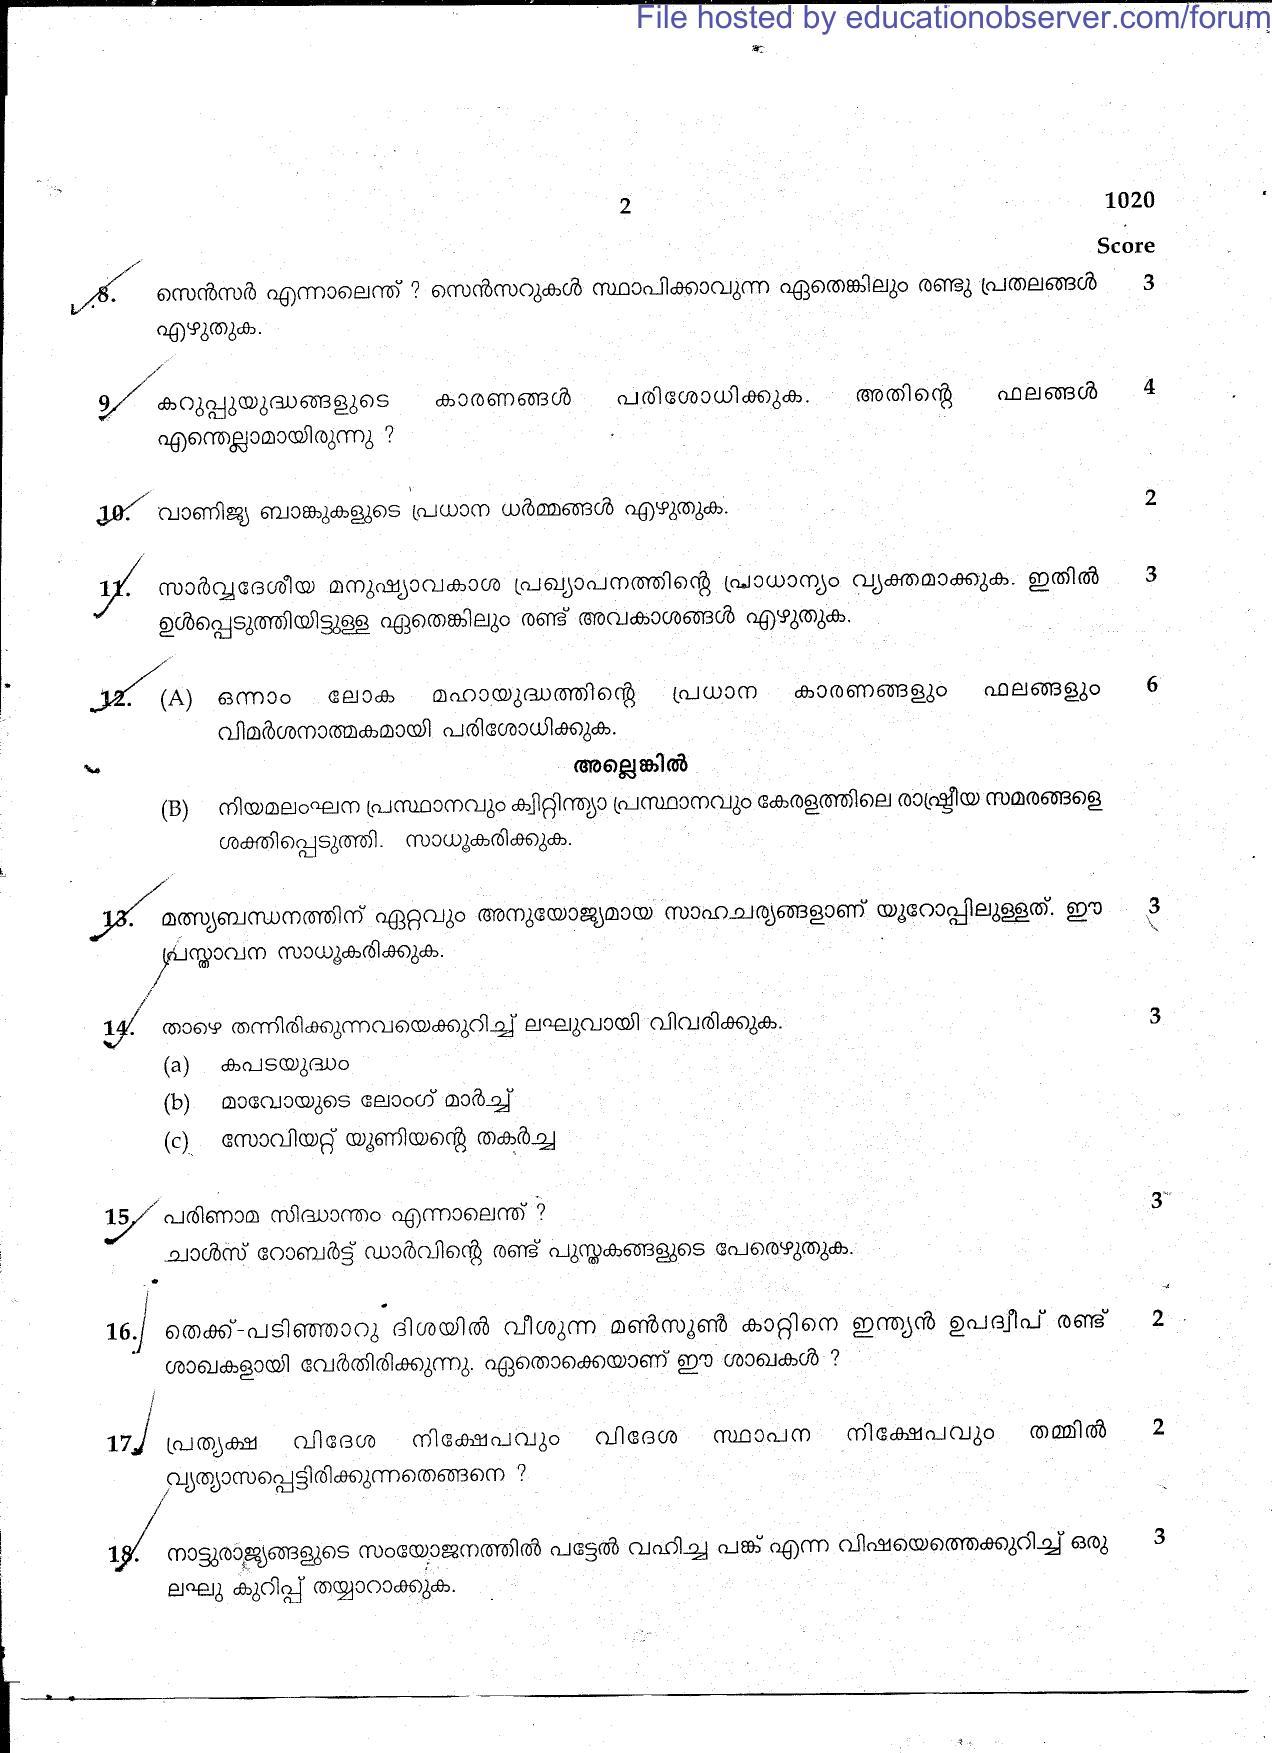 Kerala SSLC 2014 Social Science (MM) Question Paper - Page 2